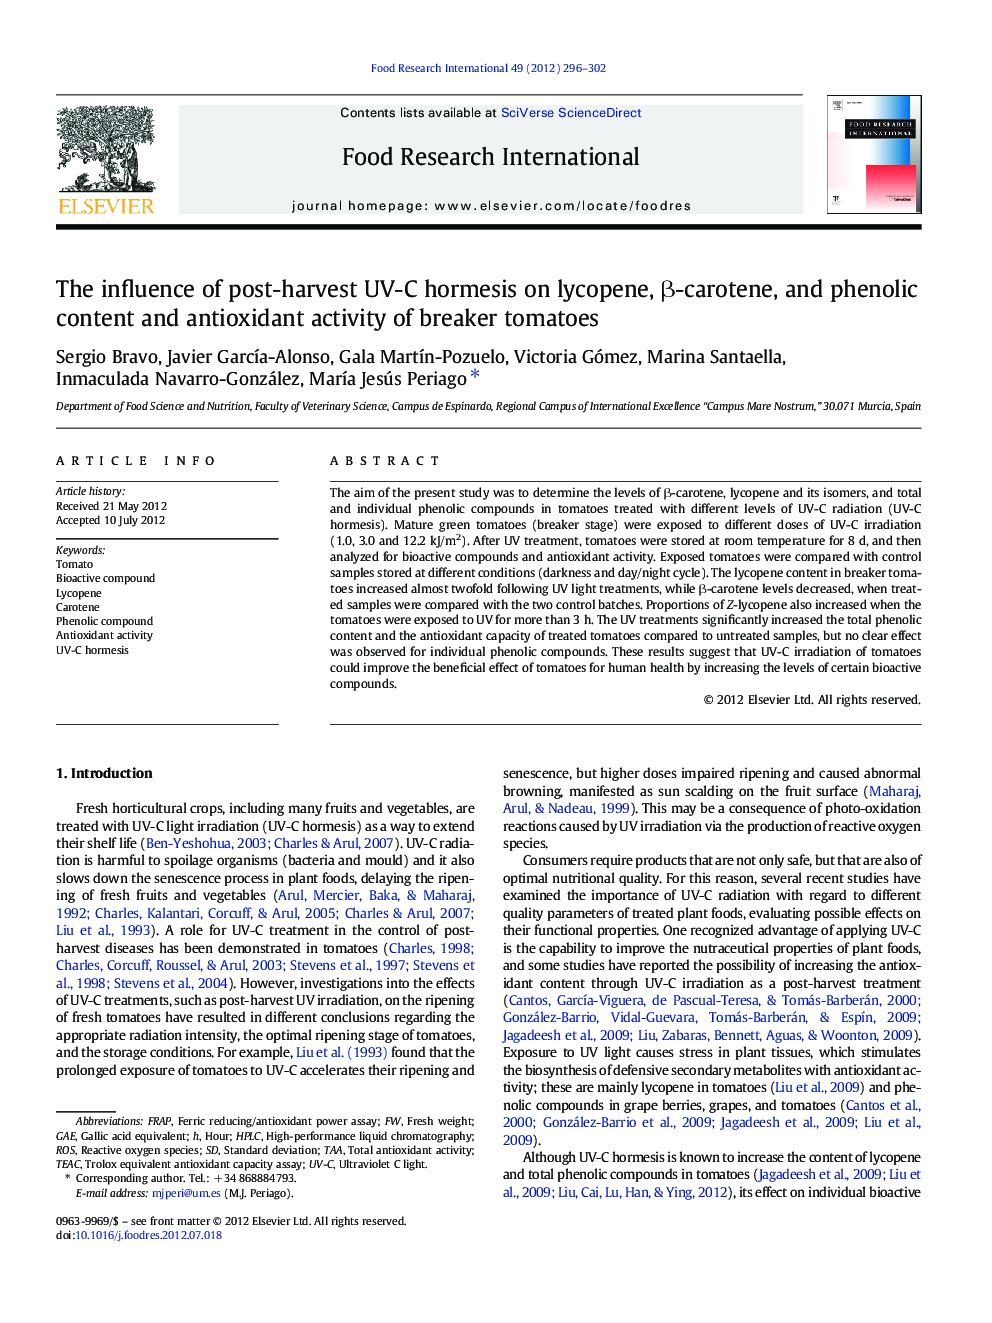 The influence of post-harvest UV-C hormesis on lycopene, Î²-carotene, and phenolic content and antioxidant activity of breaker tomatoes